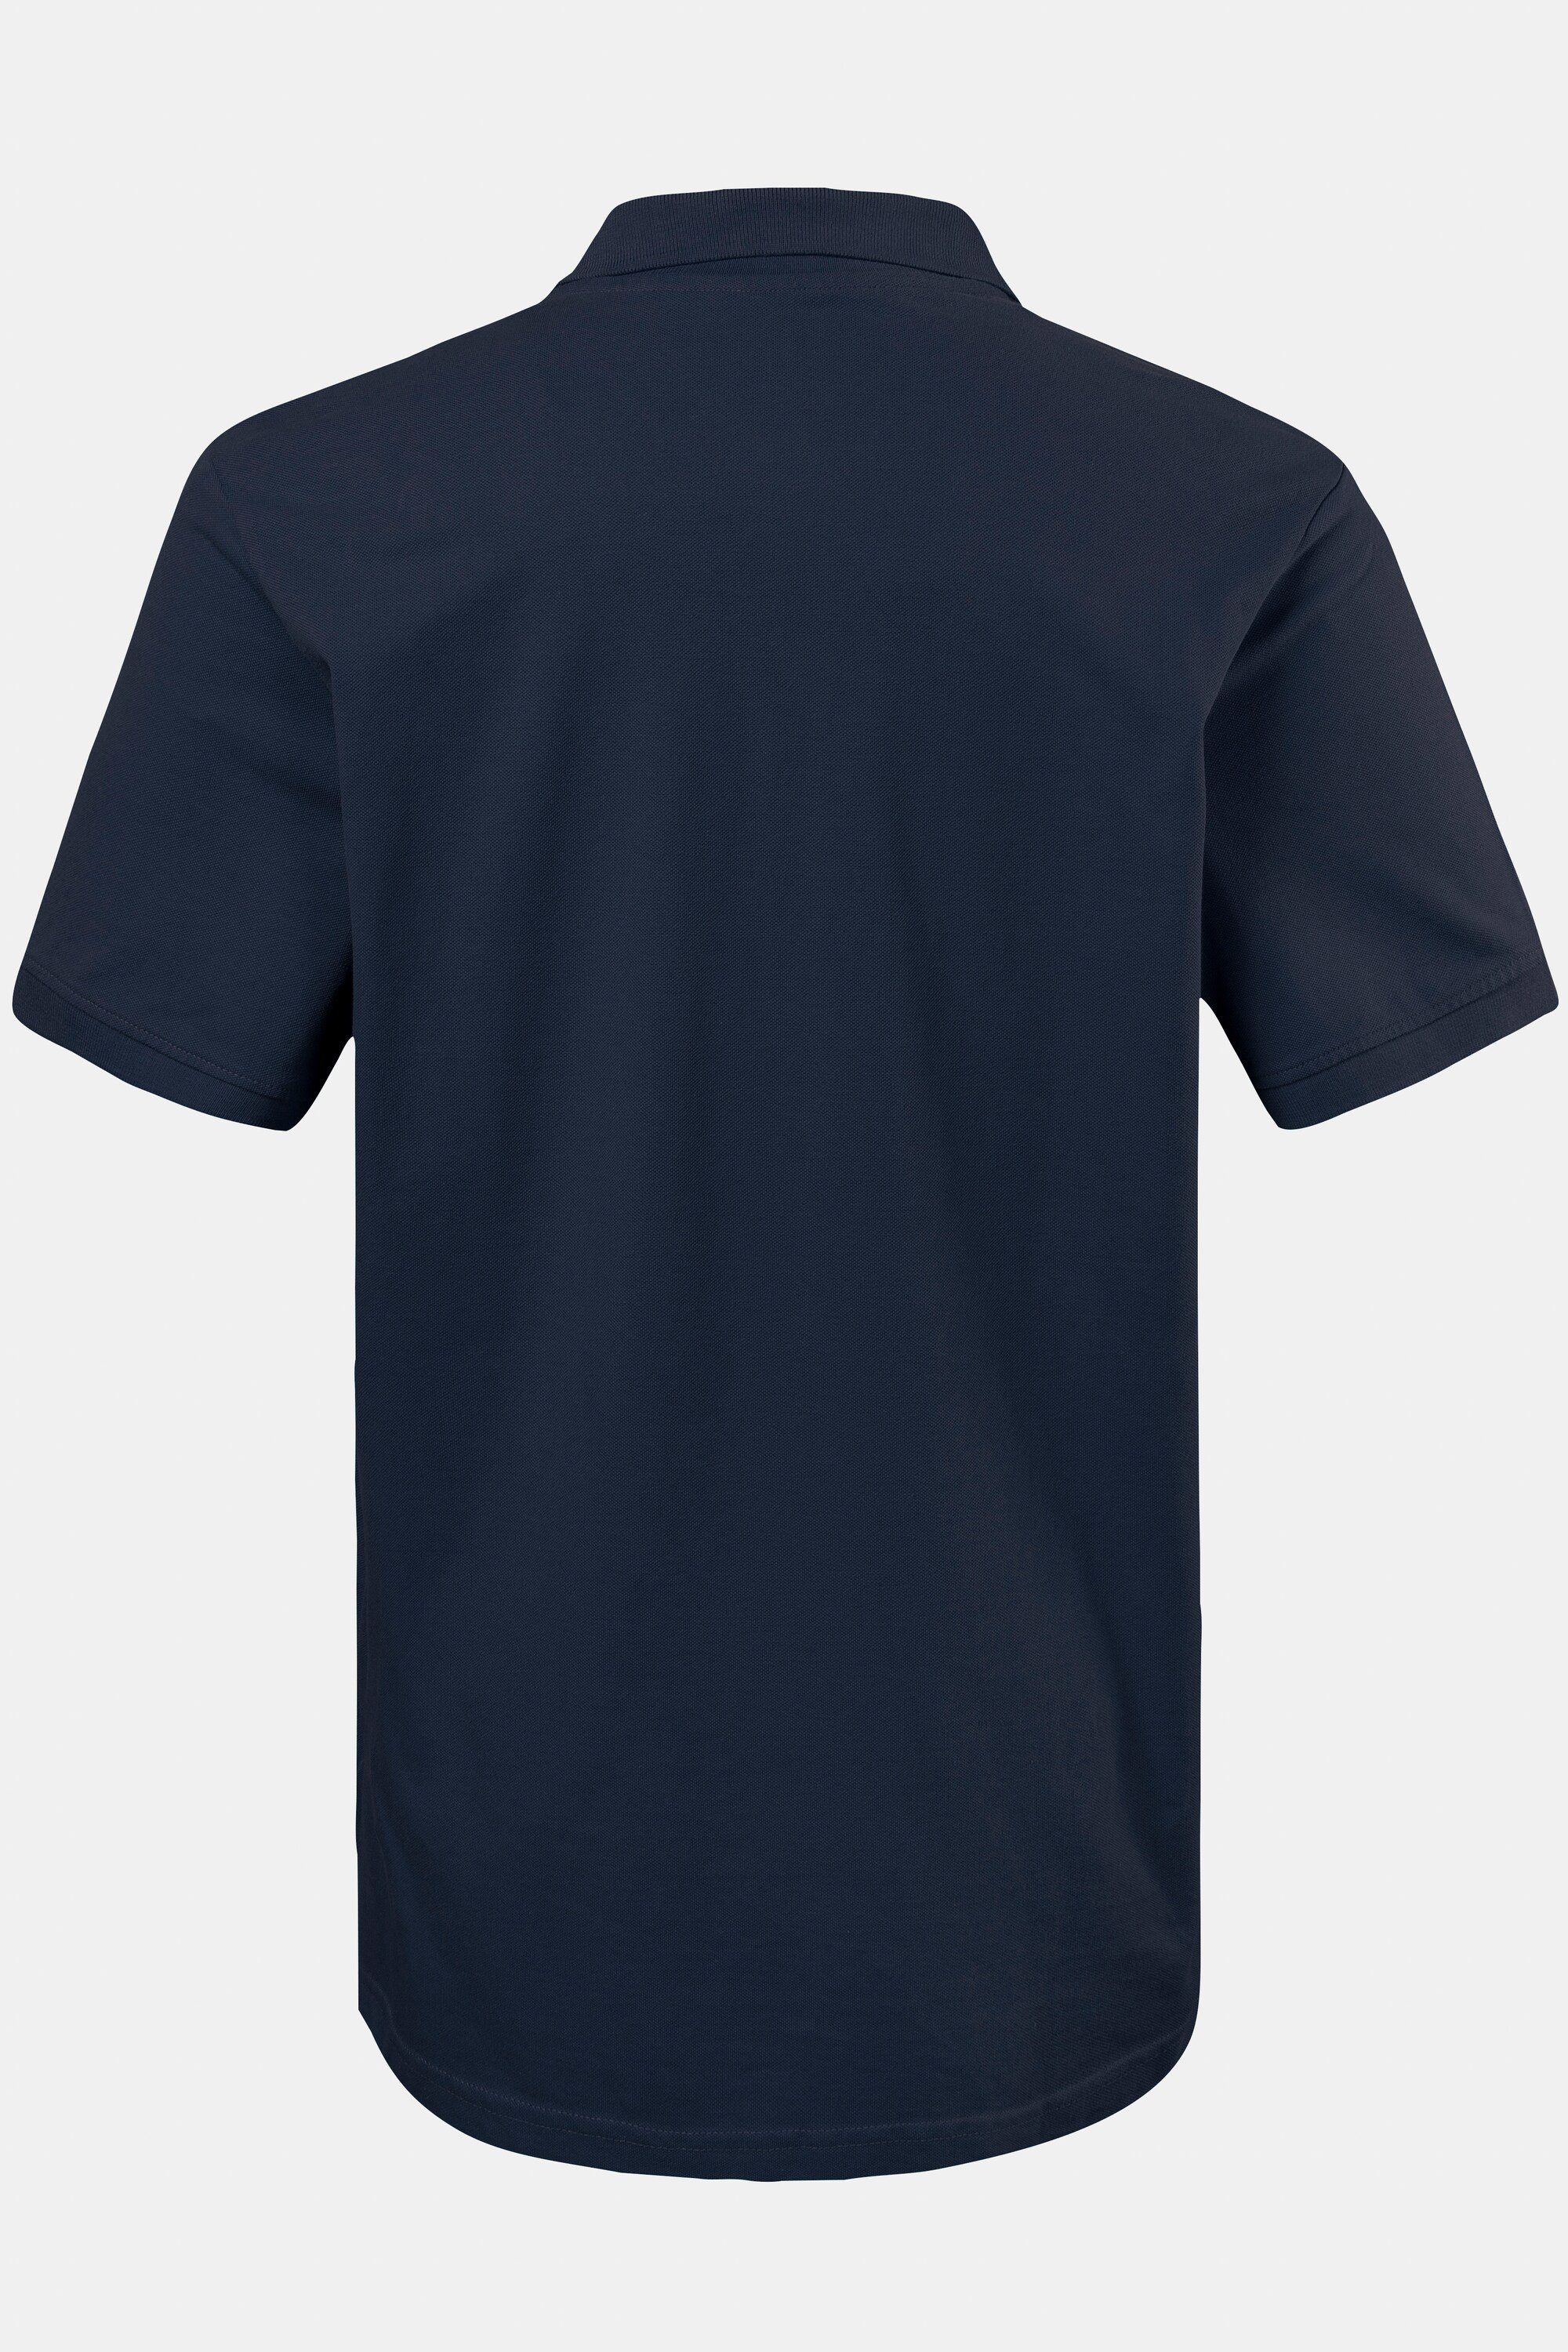 Halbarm Poloshirt JP1880 10XL marine Piqué Basic bis dunkel Poloshirt